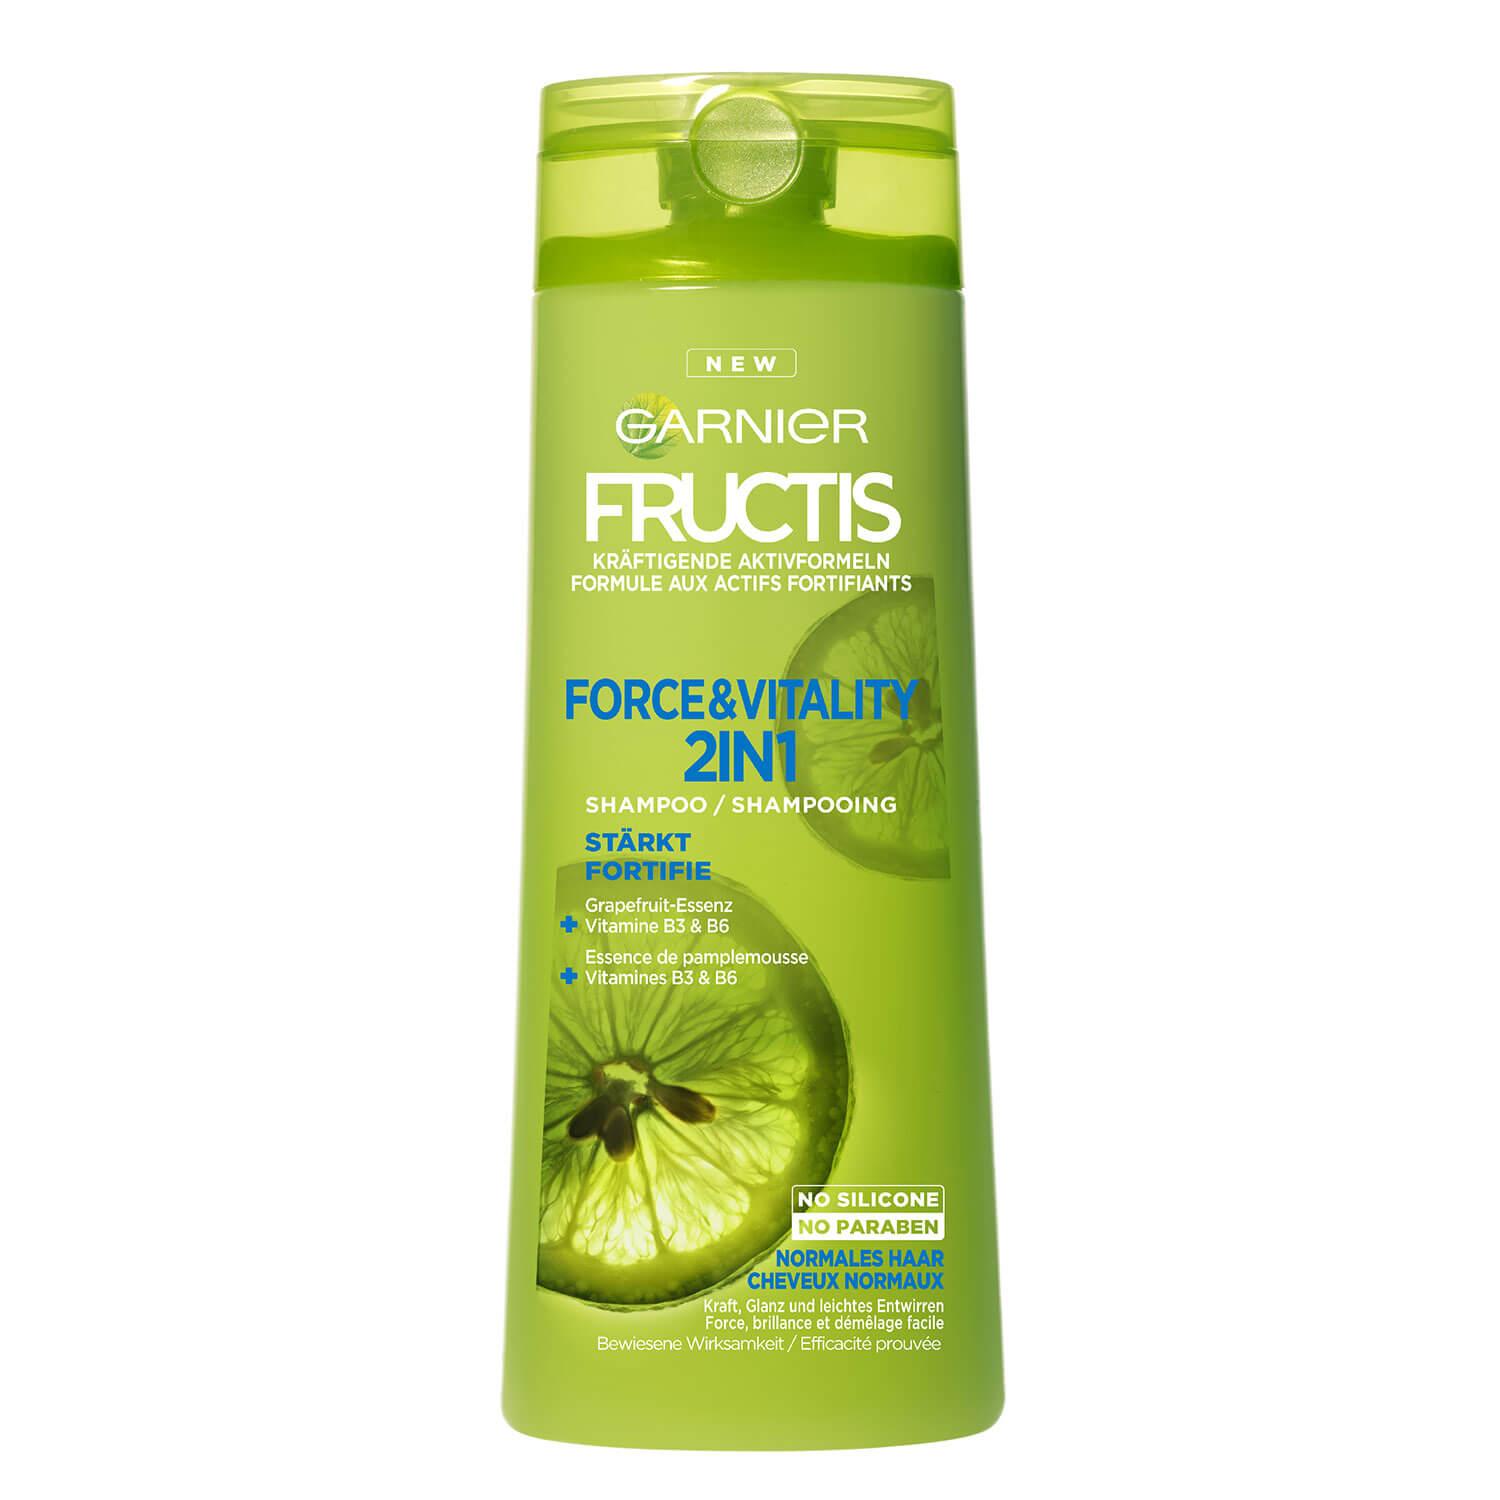 Fructis - Force & Vitality 2in1 Strengthening Shampoo